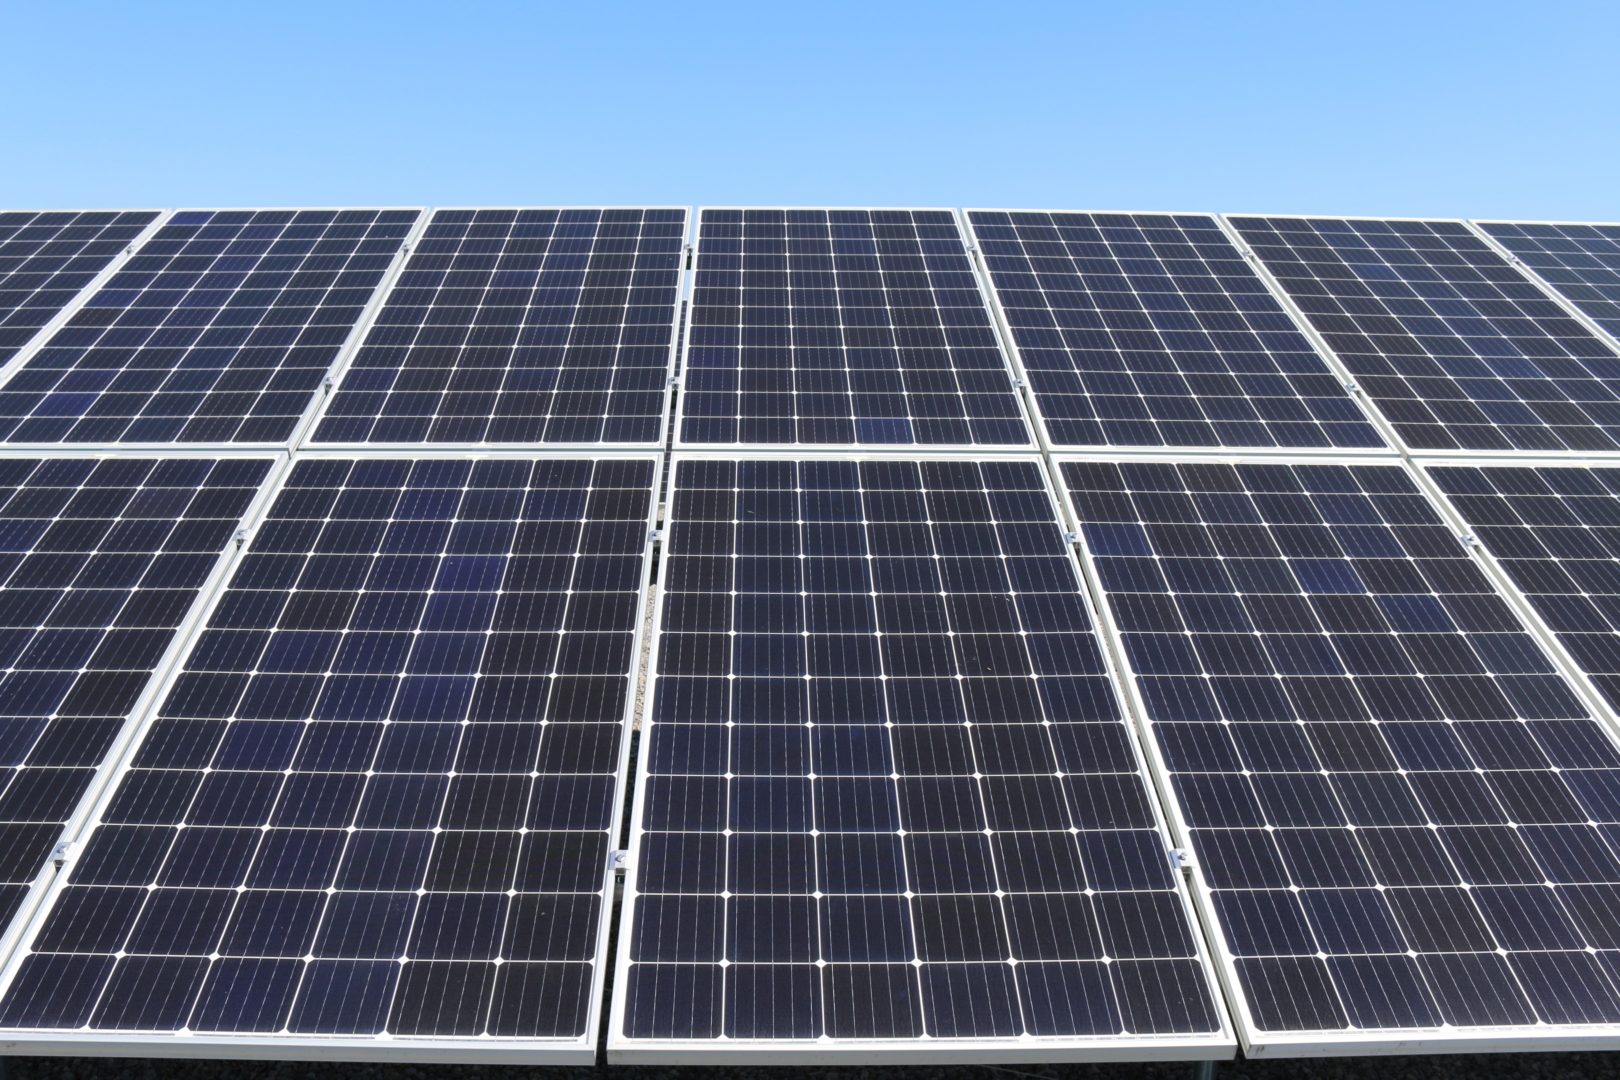 An array of solar panels